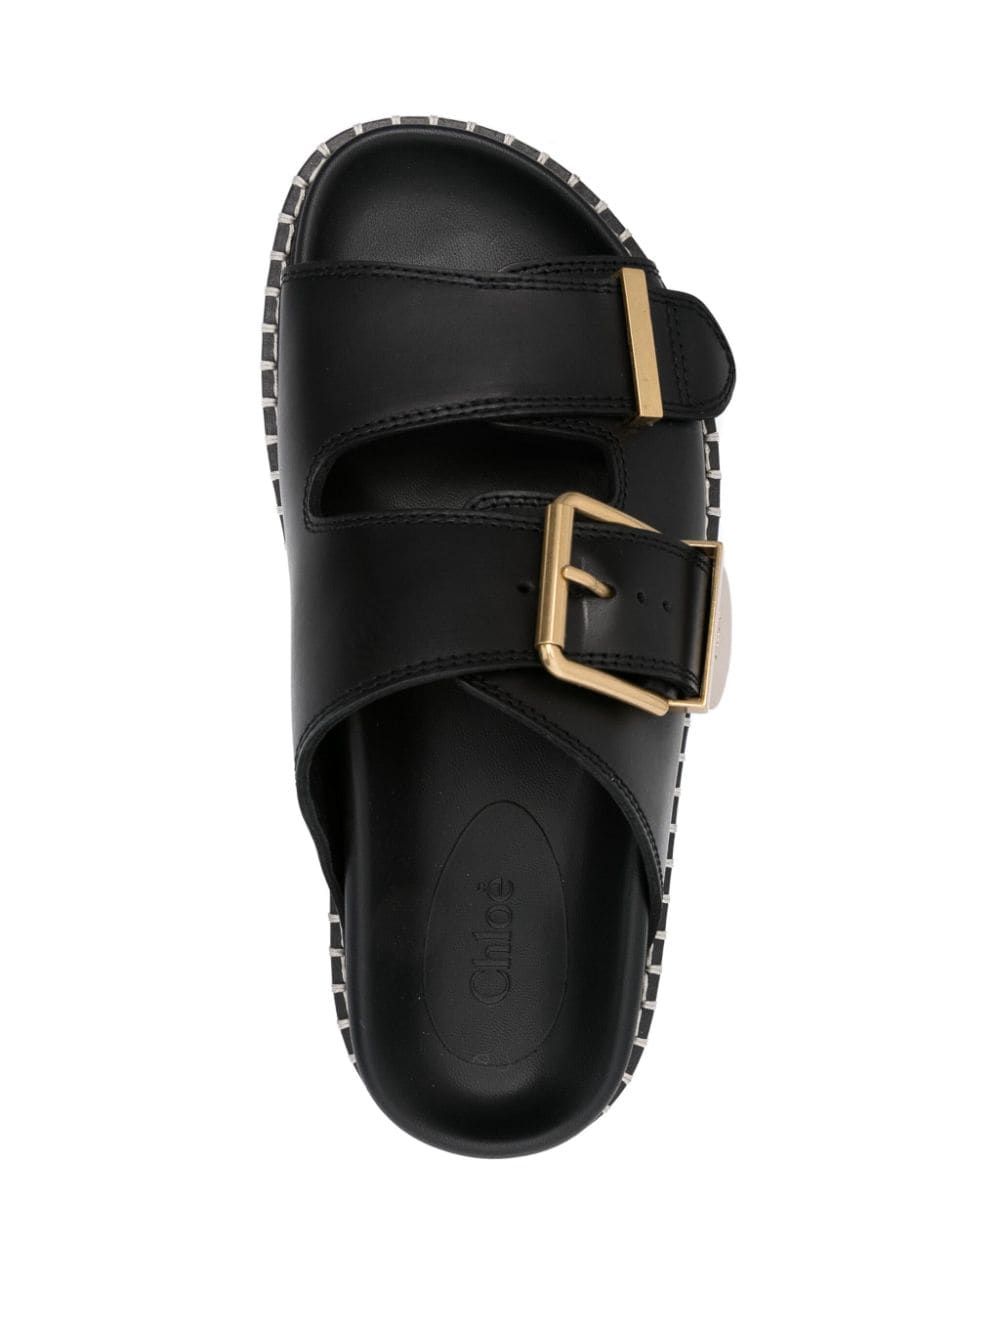 CHLOÉ Black Buckled Flat Sandals for Women